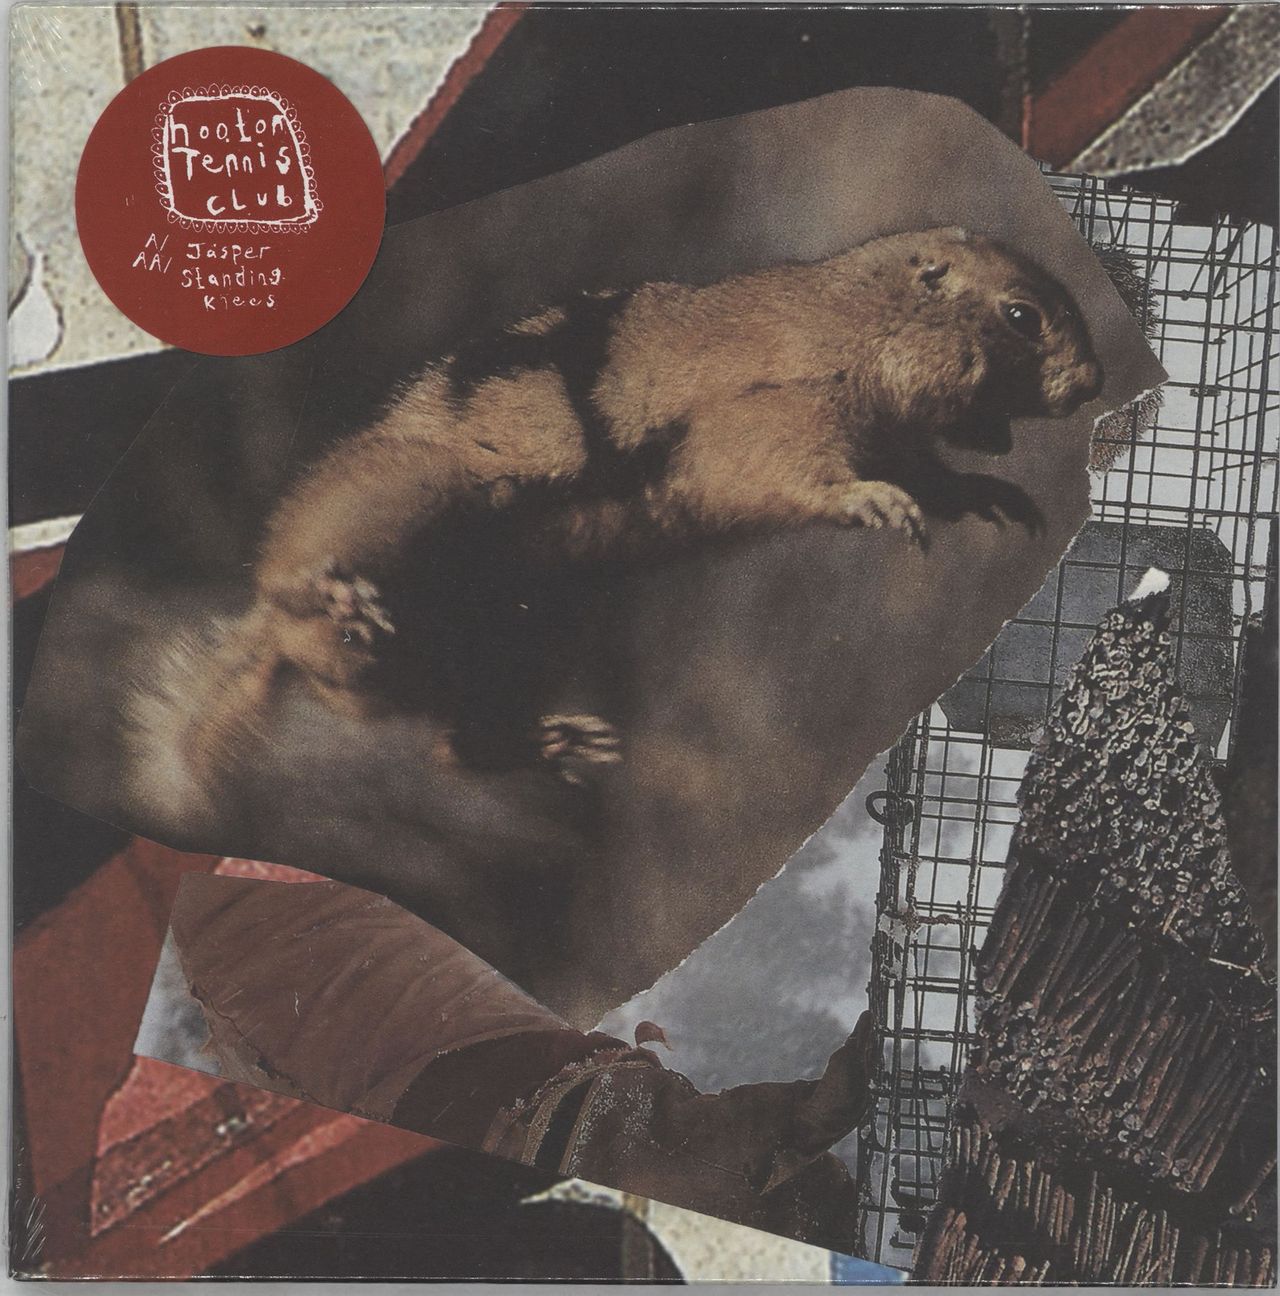 Hooton Tennis Club Jasper / Standing Knees - 1st - Sealed UK 7" vinyl single (7 inch record / 45) HVN301